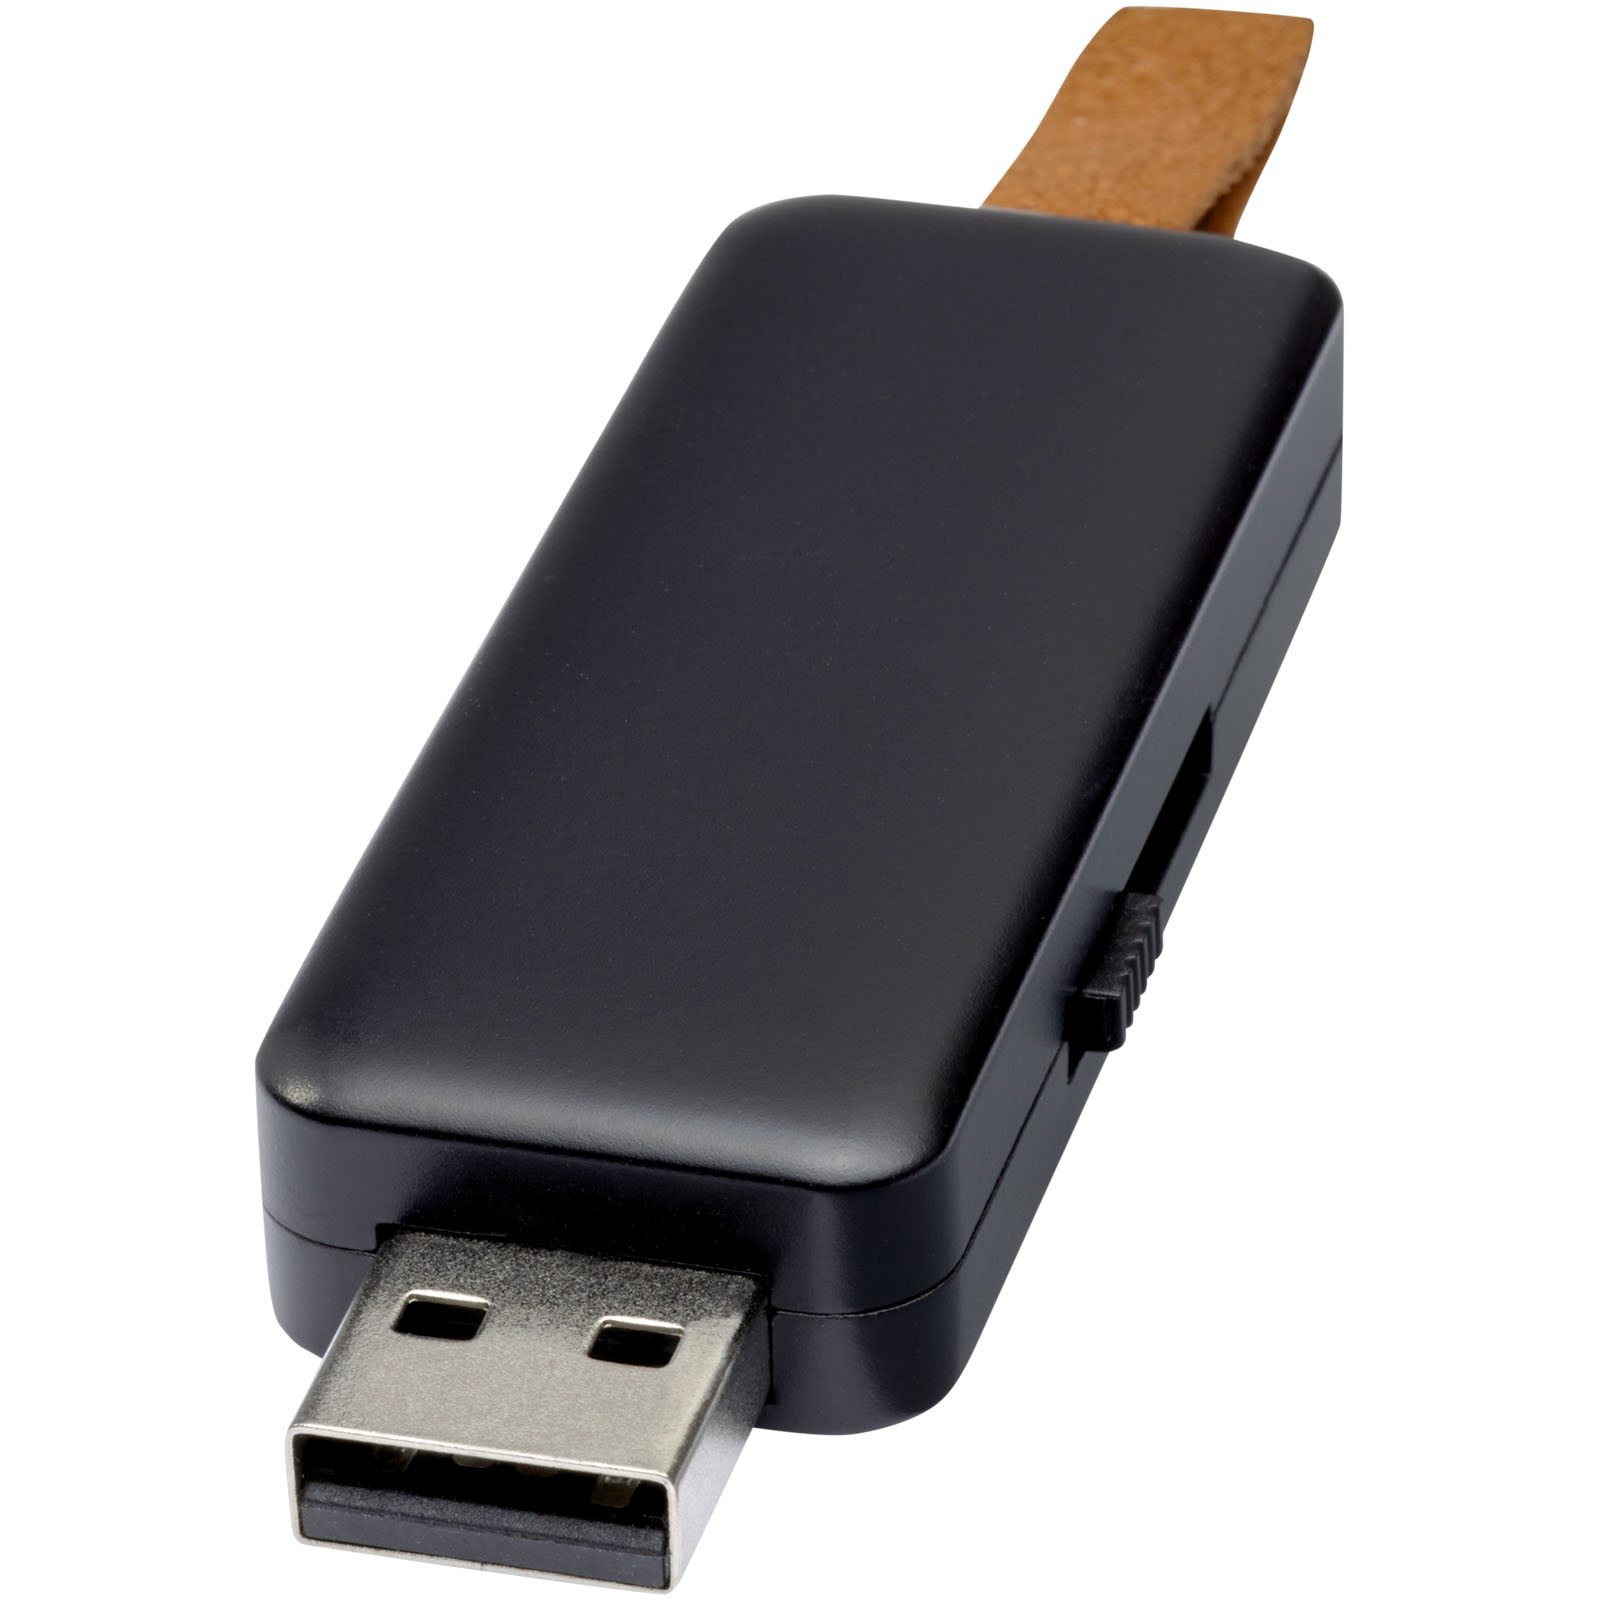 Technology - Gleam 8GB light-up USB flash drive